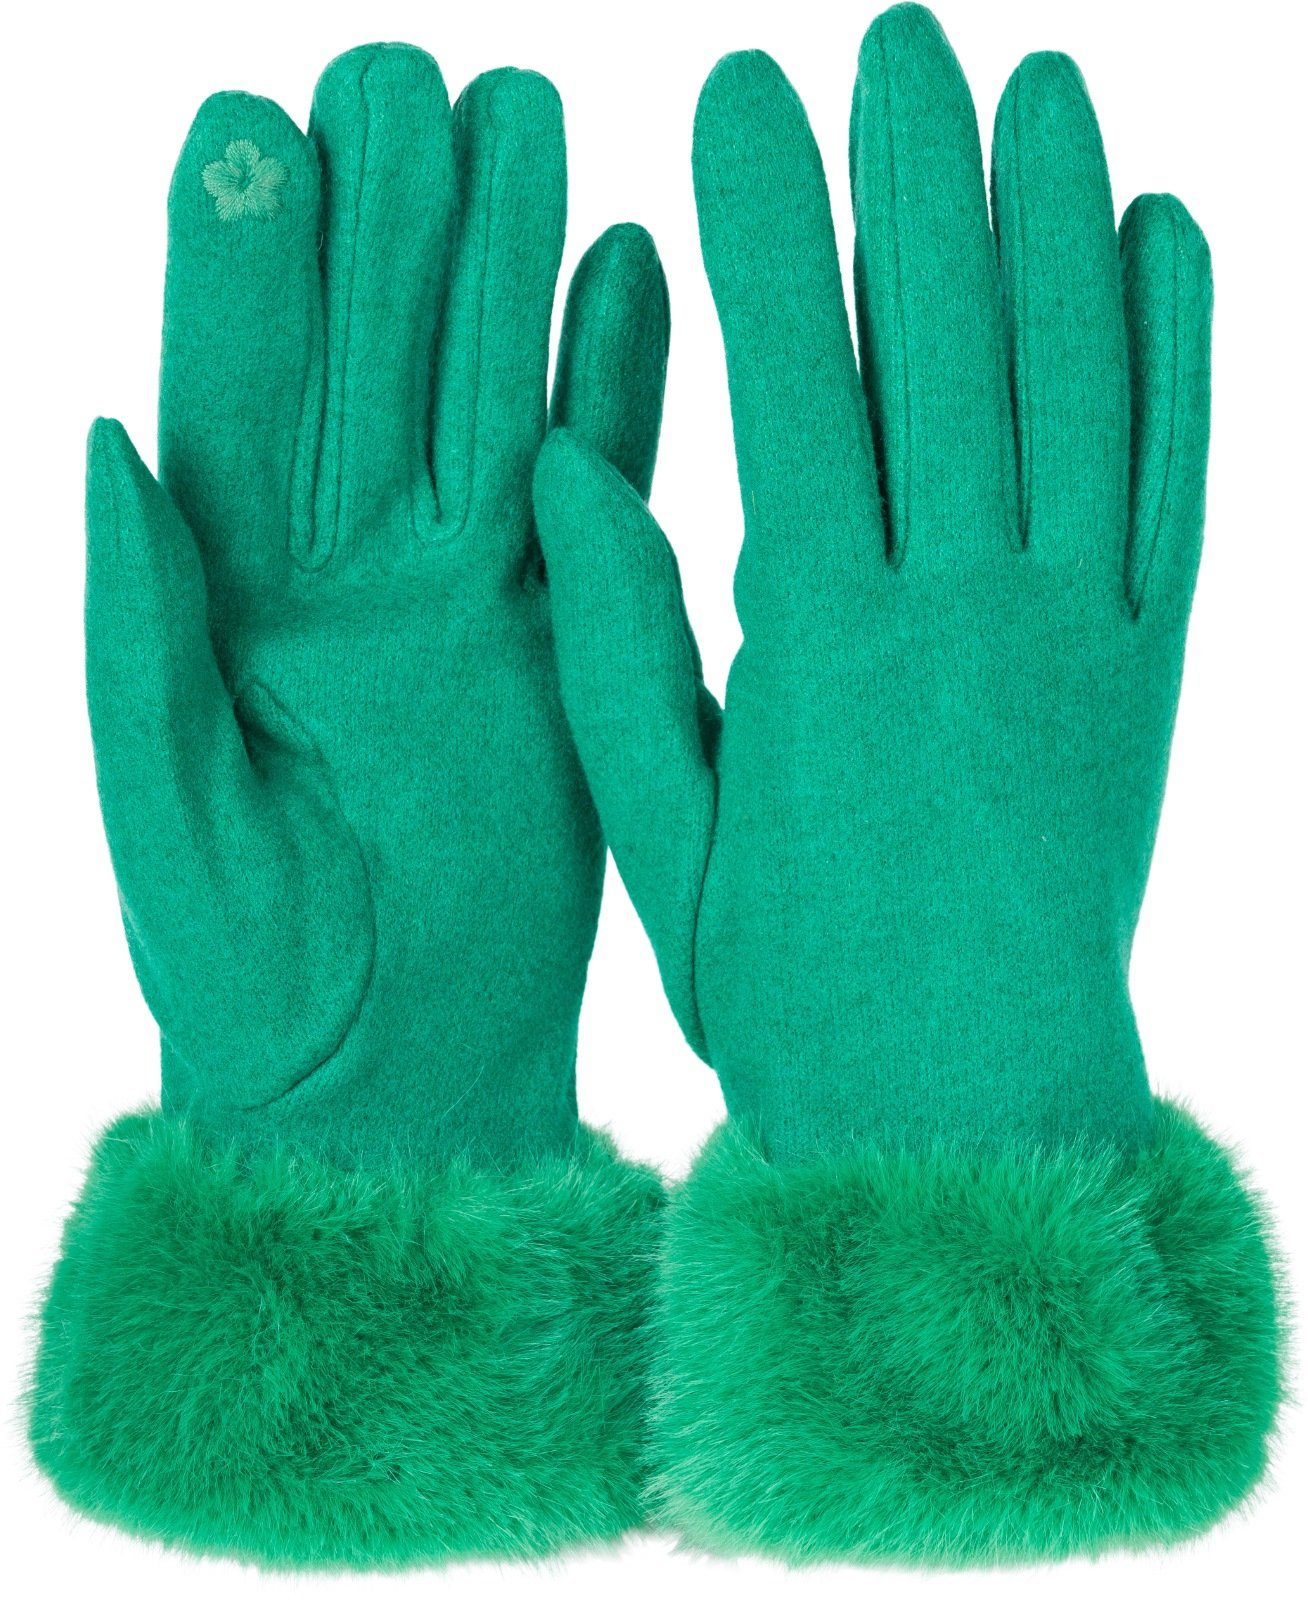 styleBREAKER Fleecehandschuhe Unifarbene Touchscreen Handschuhe mit Kunstfell Grün | Fleecehandschuhe